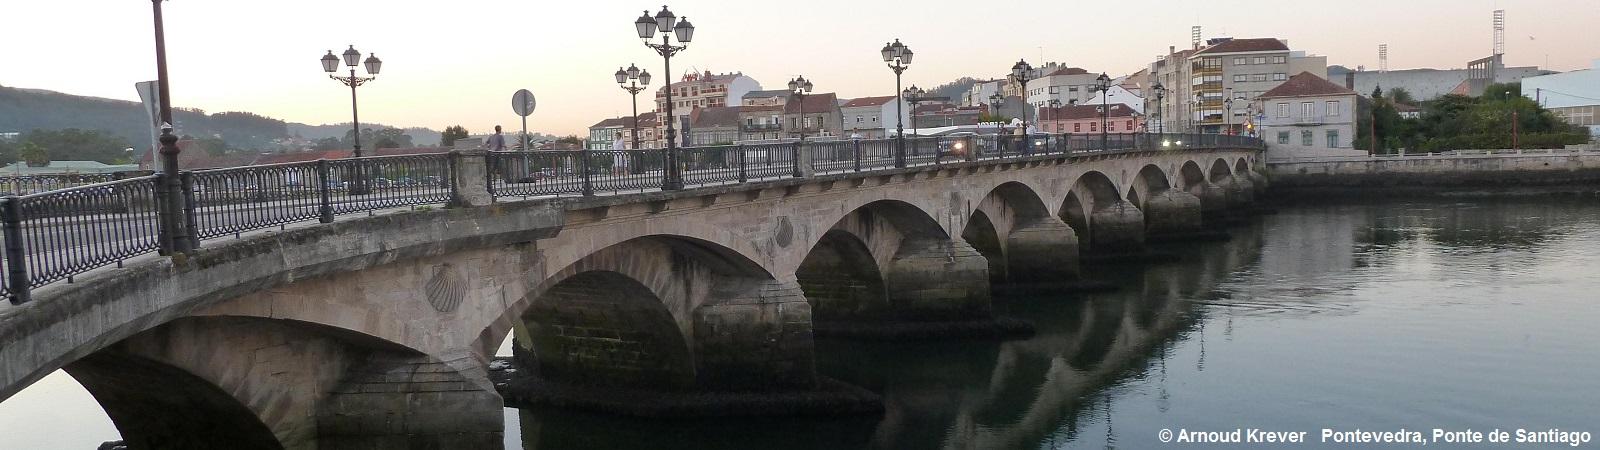 Portugués2 (501) Pontevedra, Ponte de Santiago